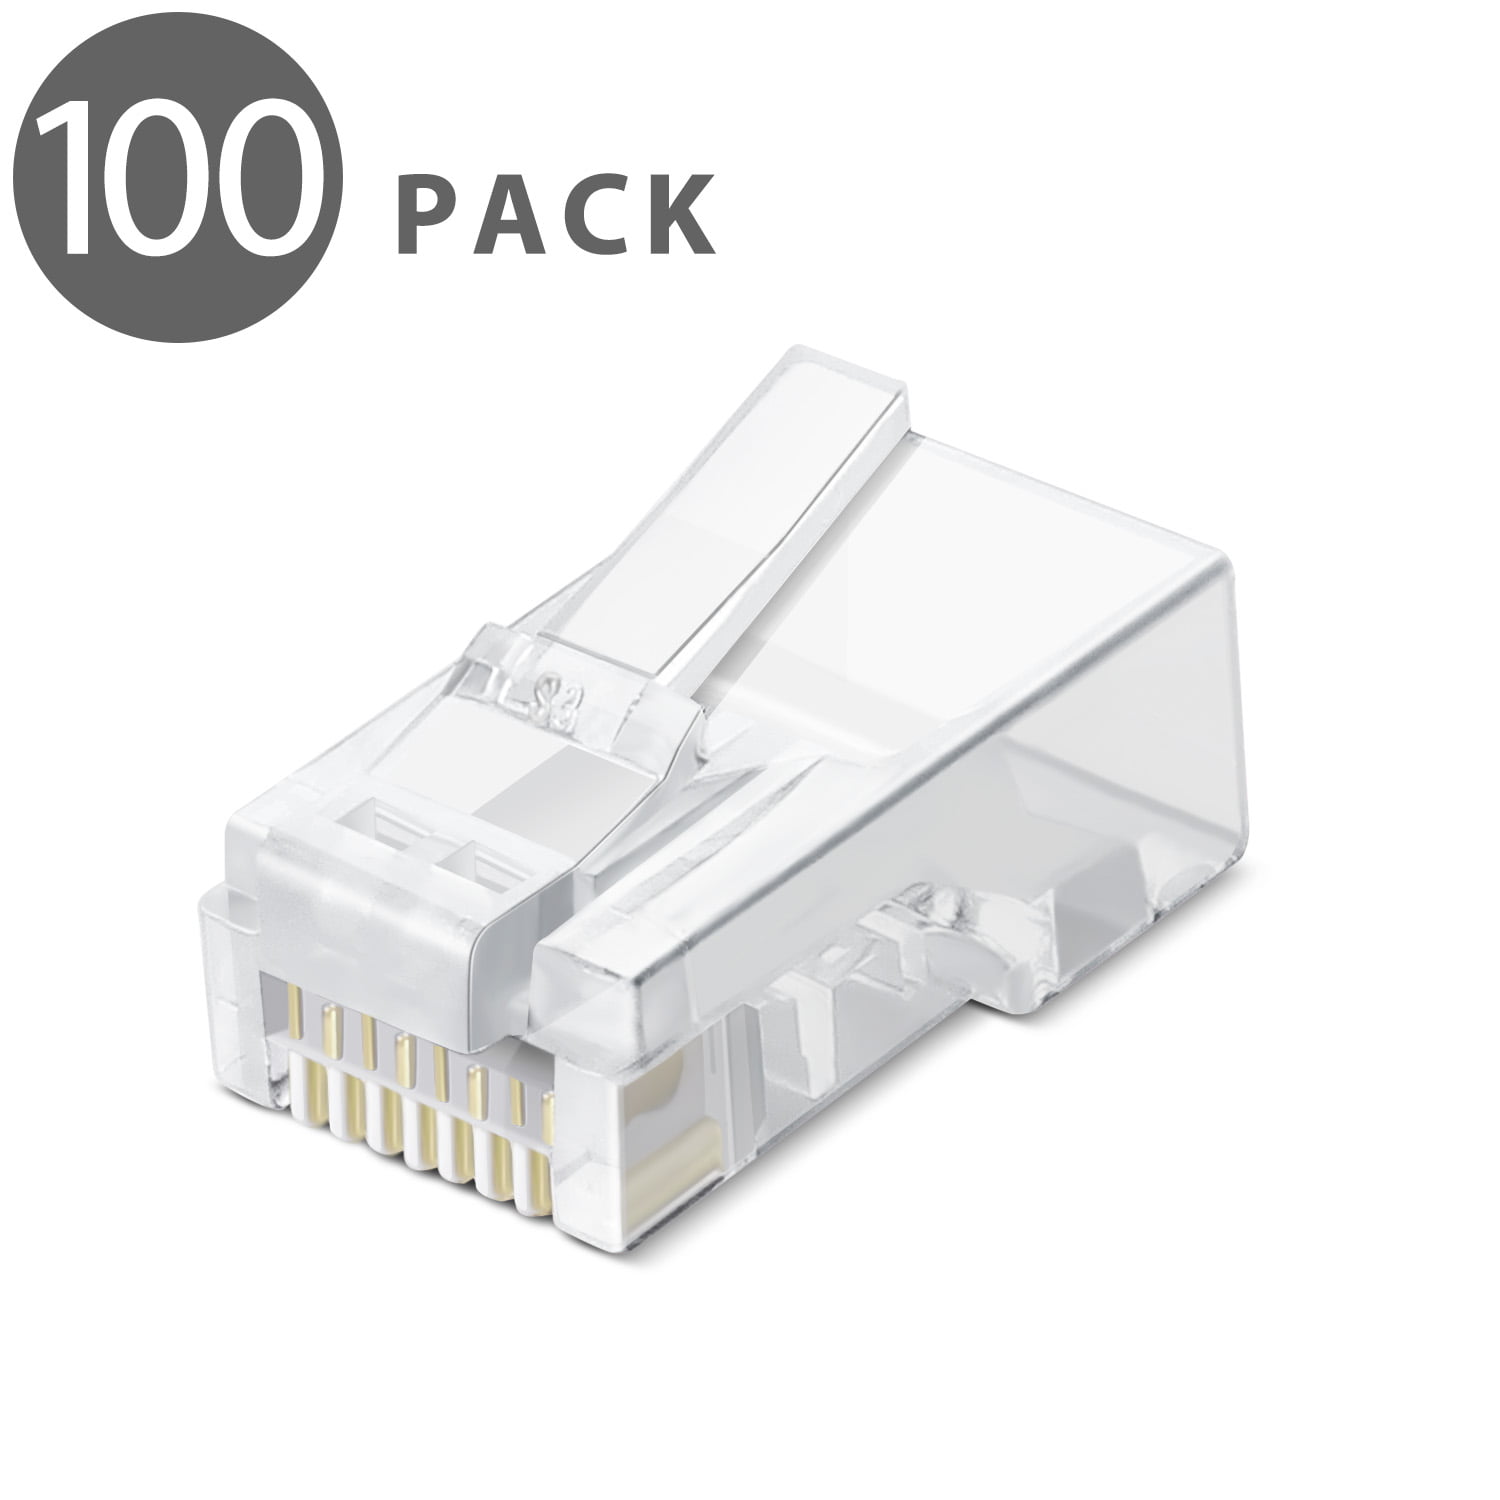 Modular Plug pack Of 100 